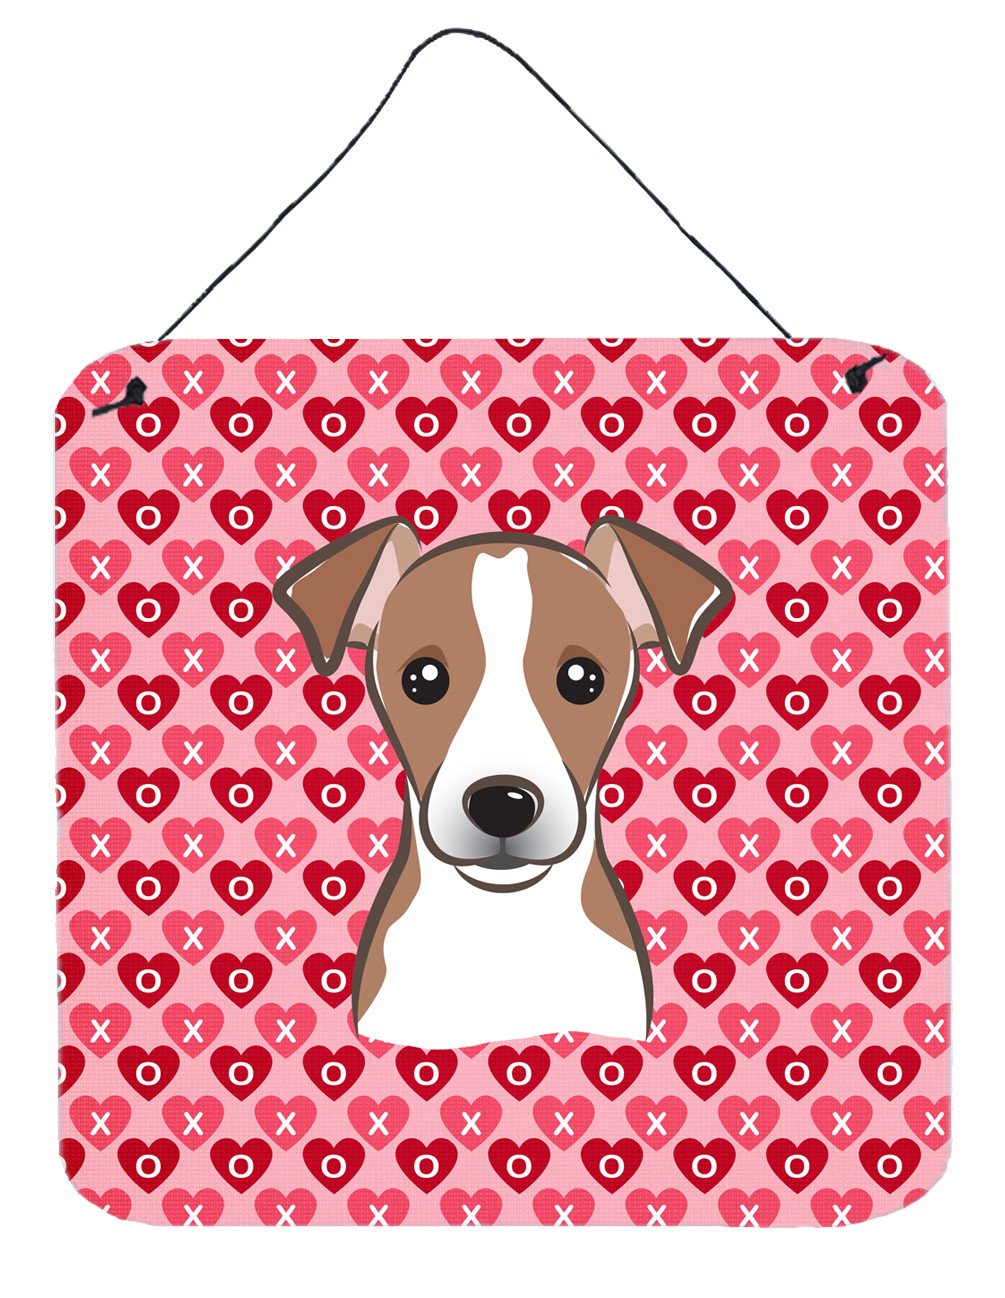 Jack Russell Terrier Hearts Wall or Door Hanging Prints BB5330DS66 by Caroline's Treasures